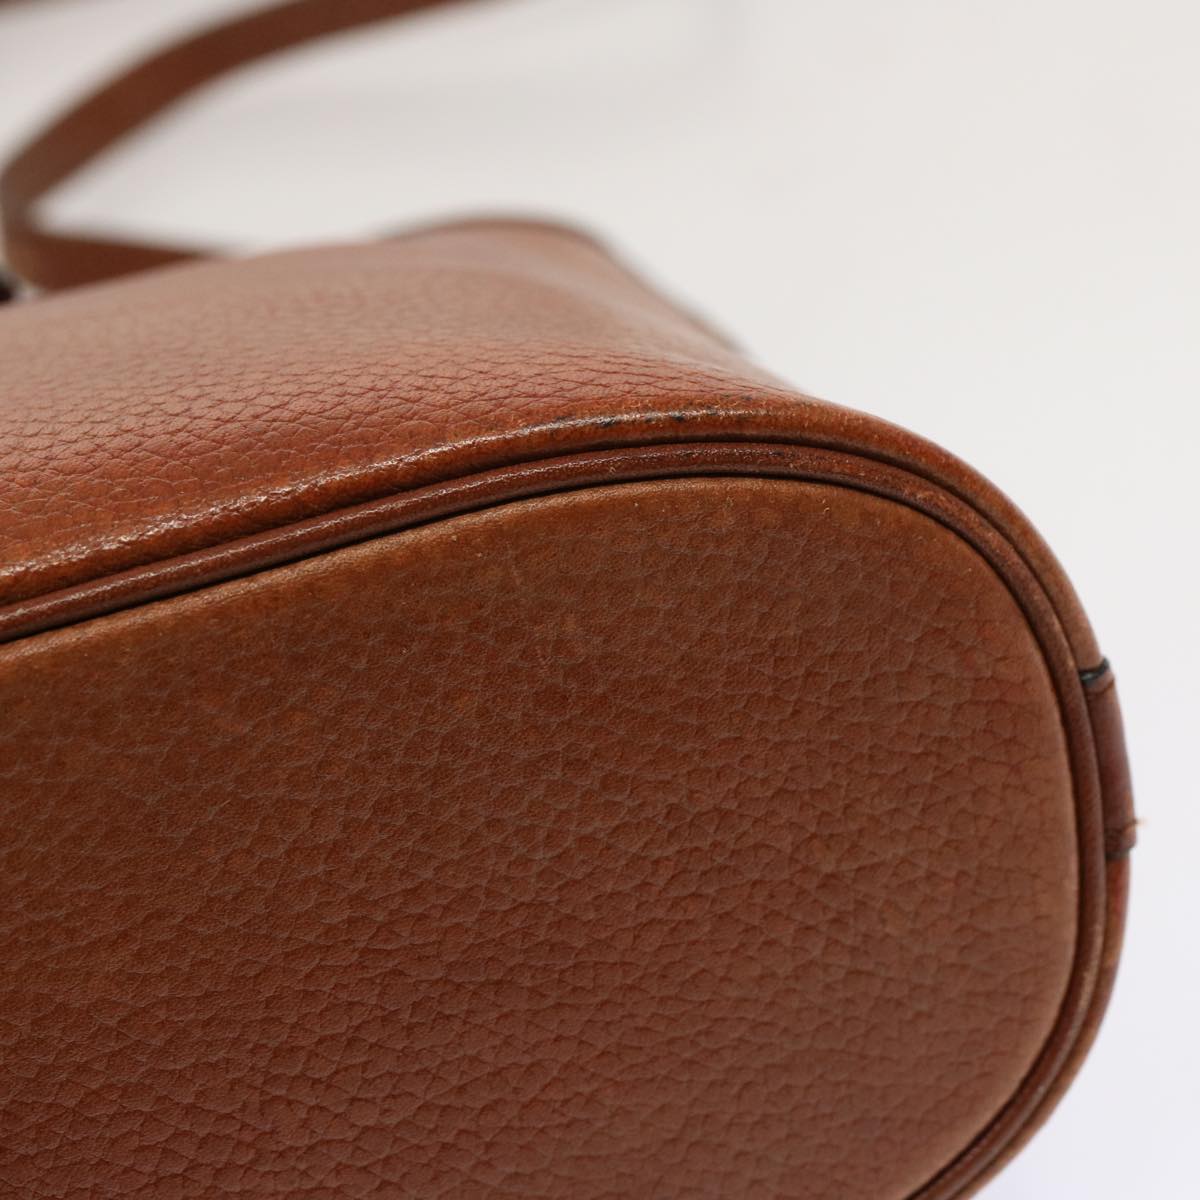 Burberrys Shoulder Bag Leather Brown Auth hk1238